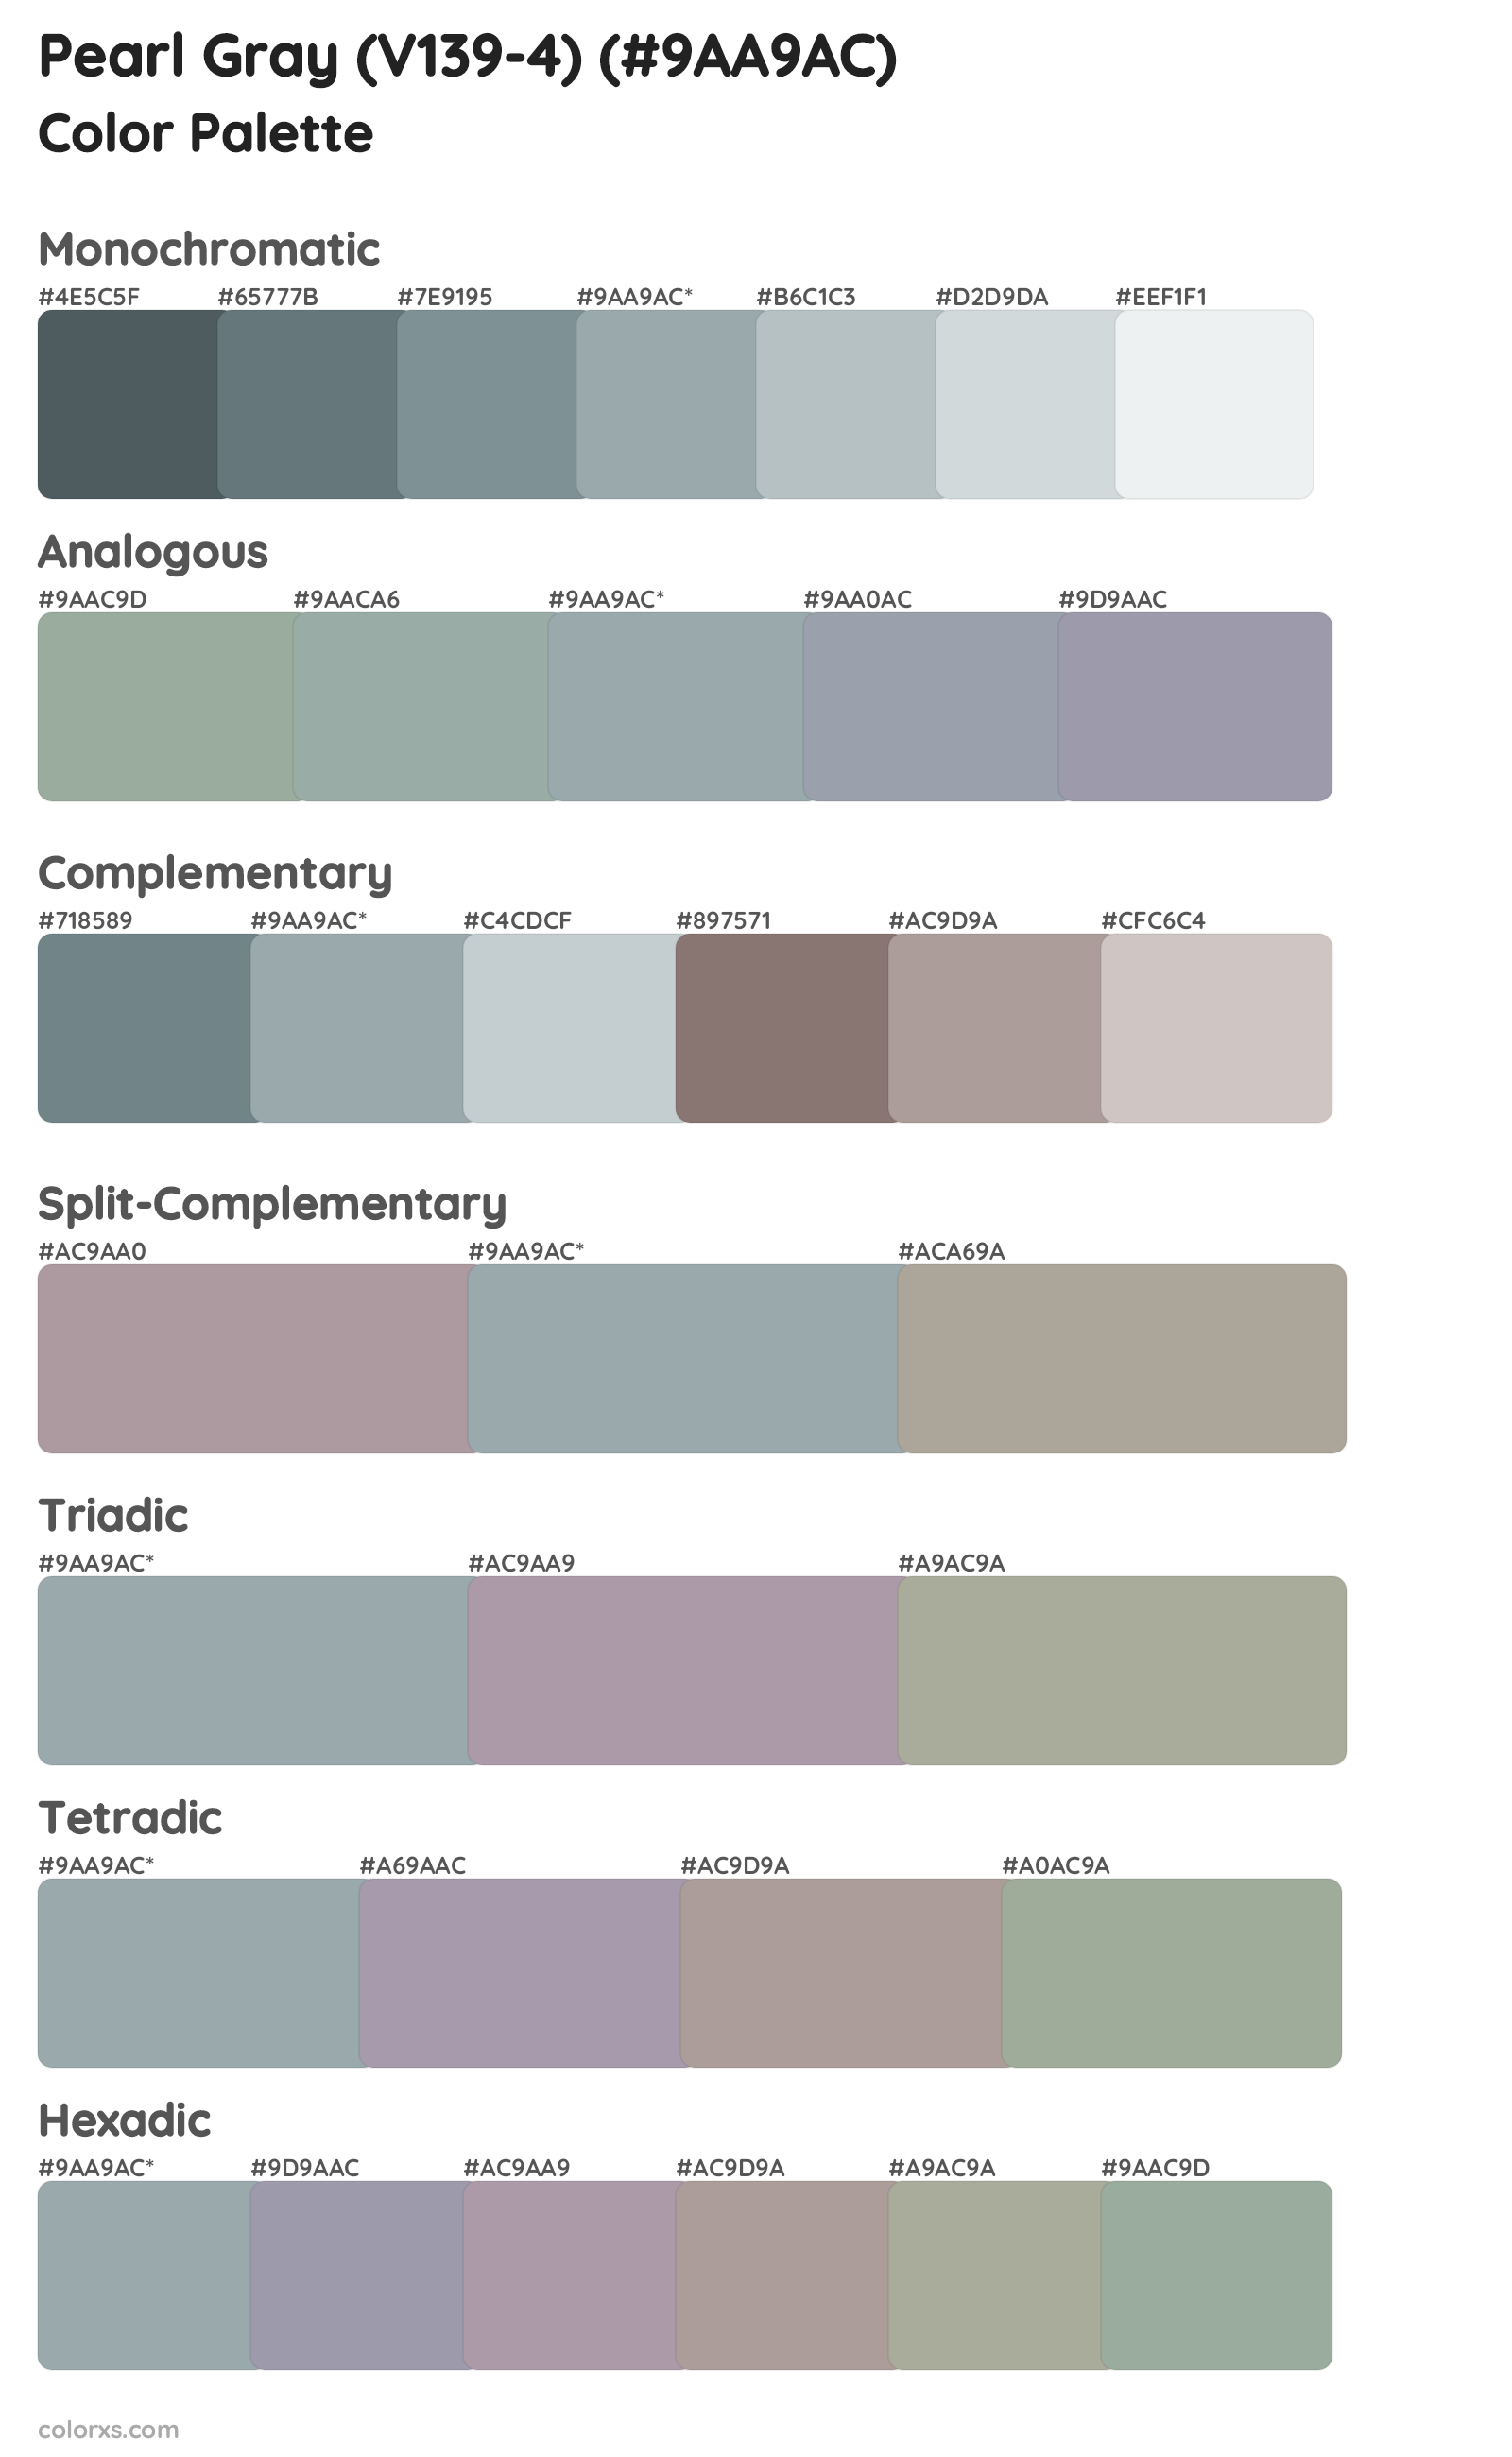 Pearl Gray (V139-4) Color Scheme Palettes